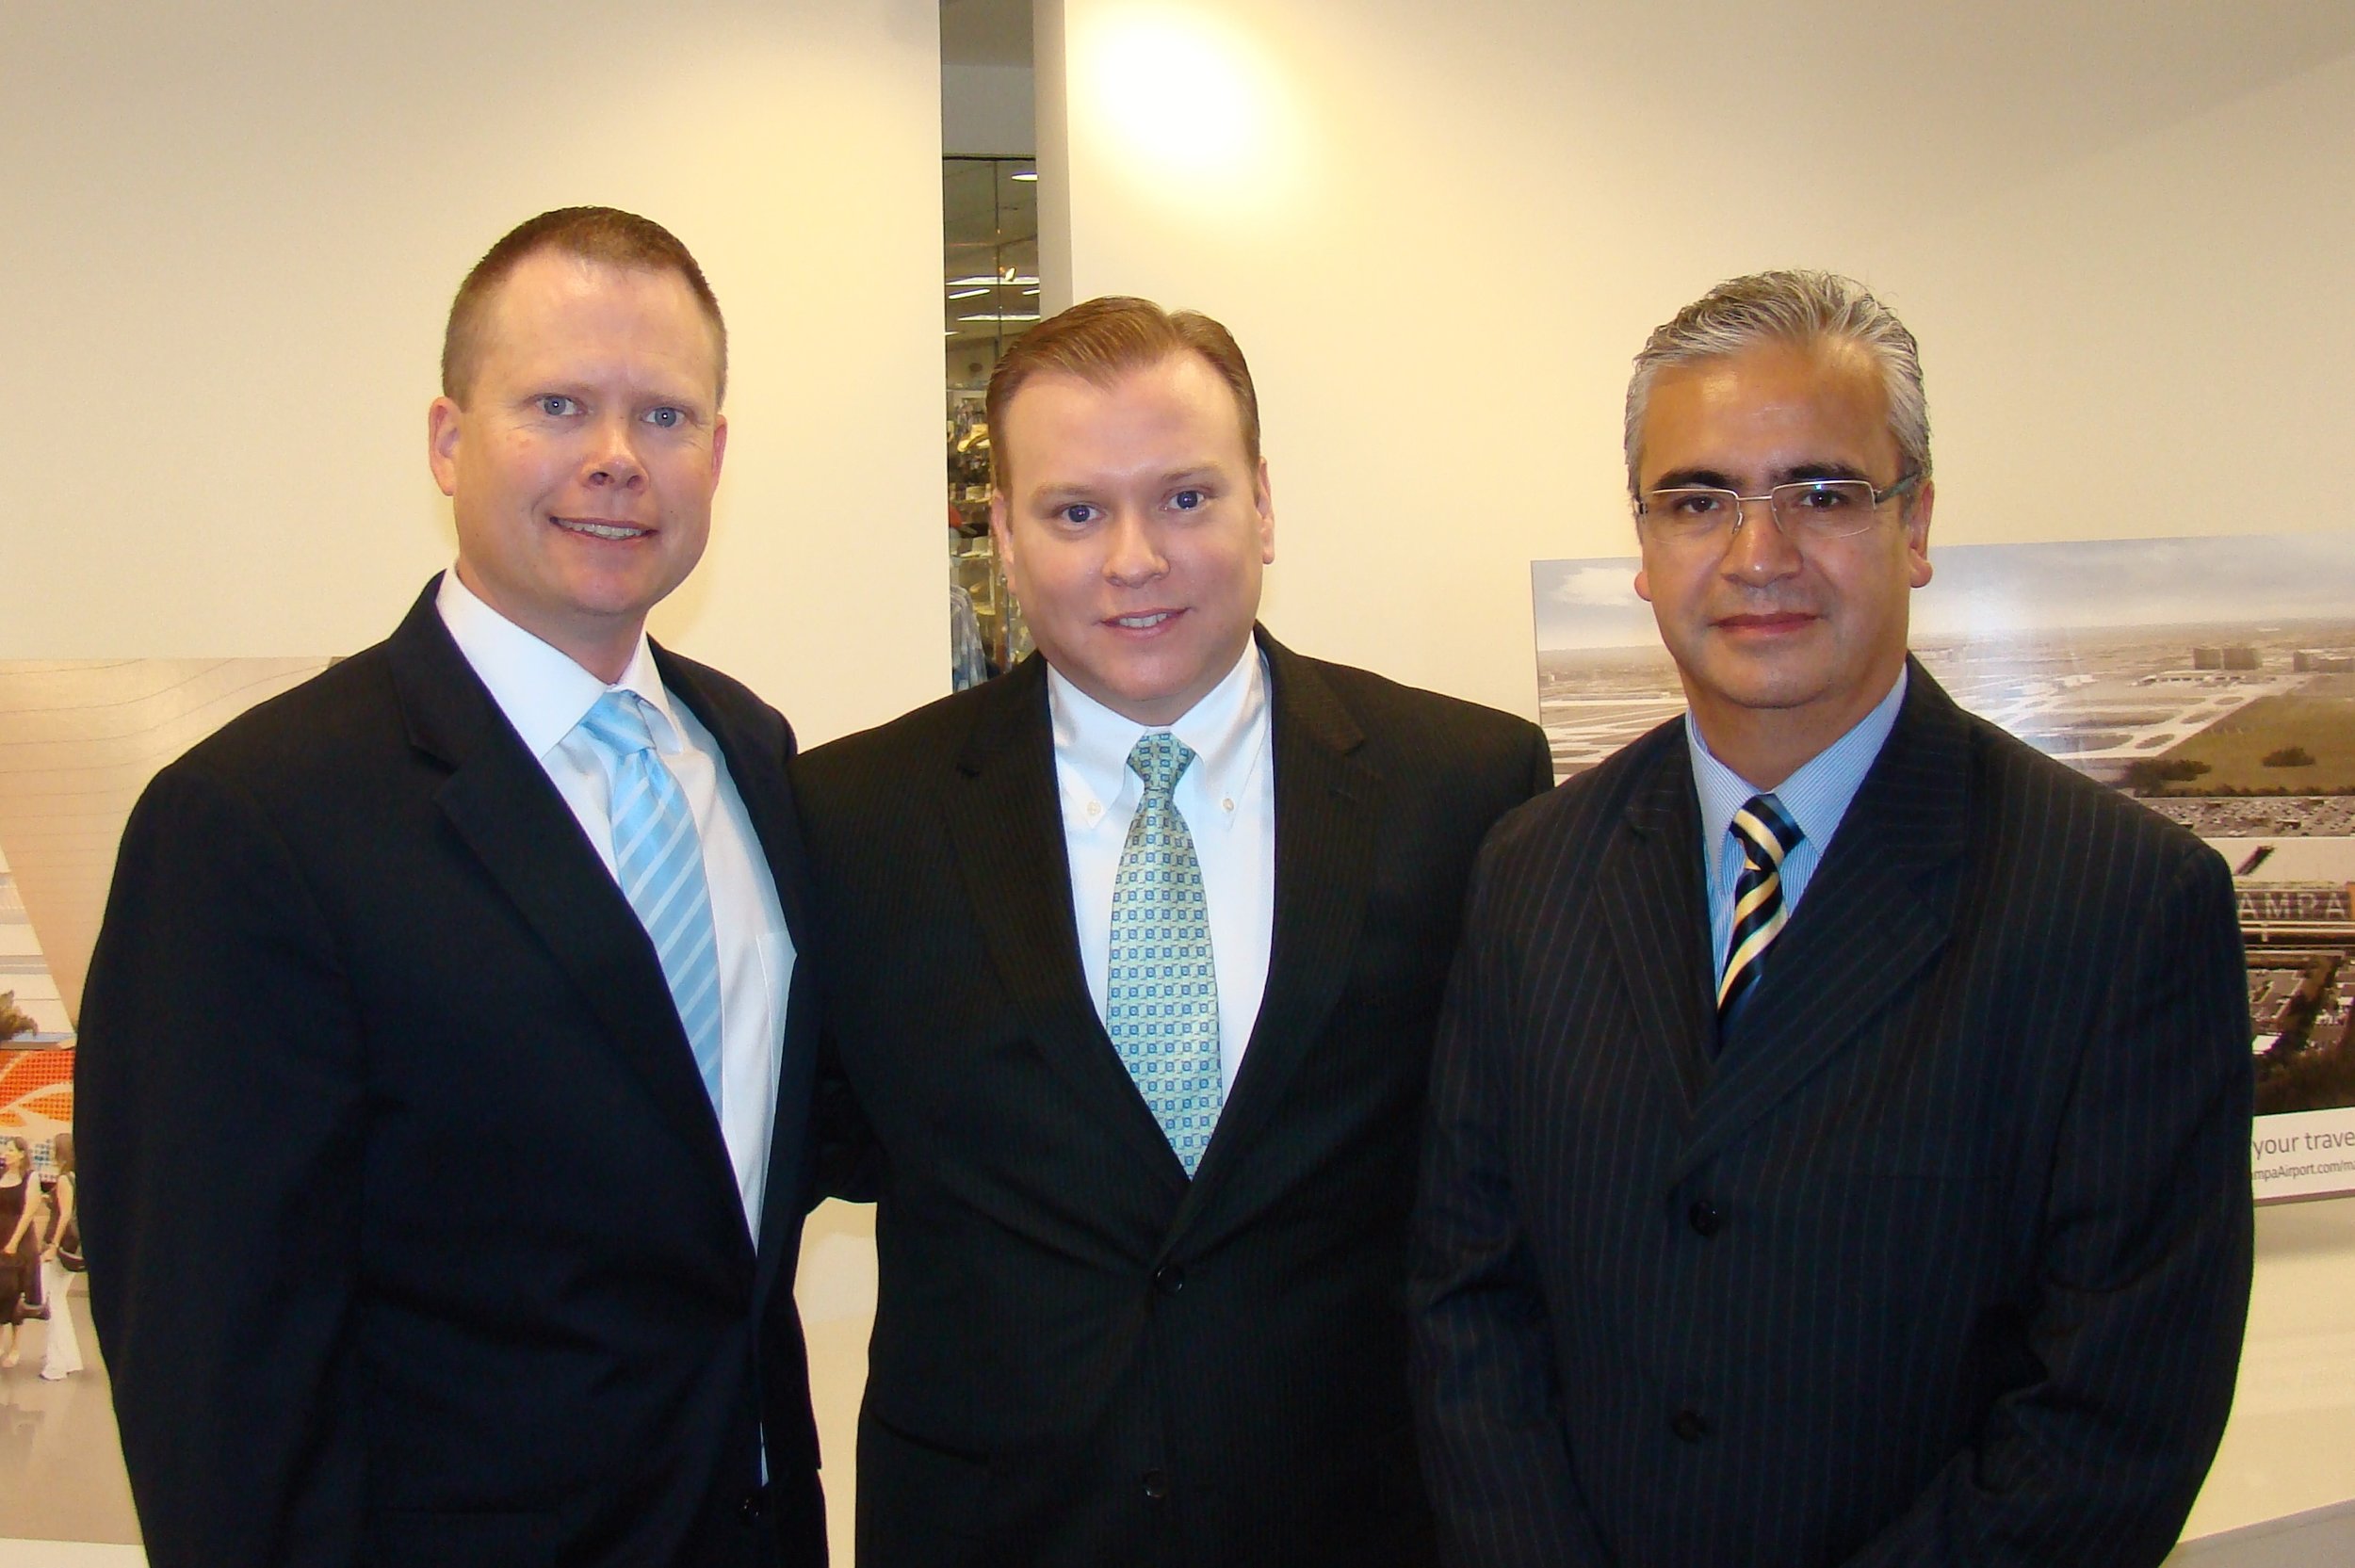 Chris Minner, Fernando Fondevila & Ricardo Pedroza at Press Conference - 1, 21 May '14.JPG